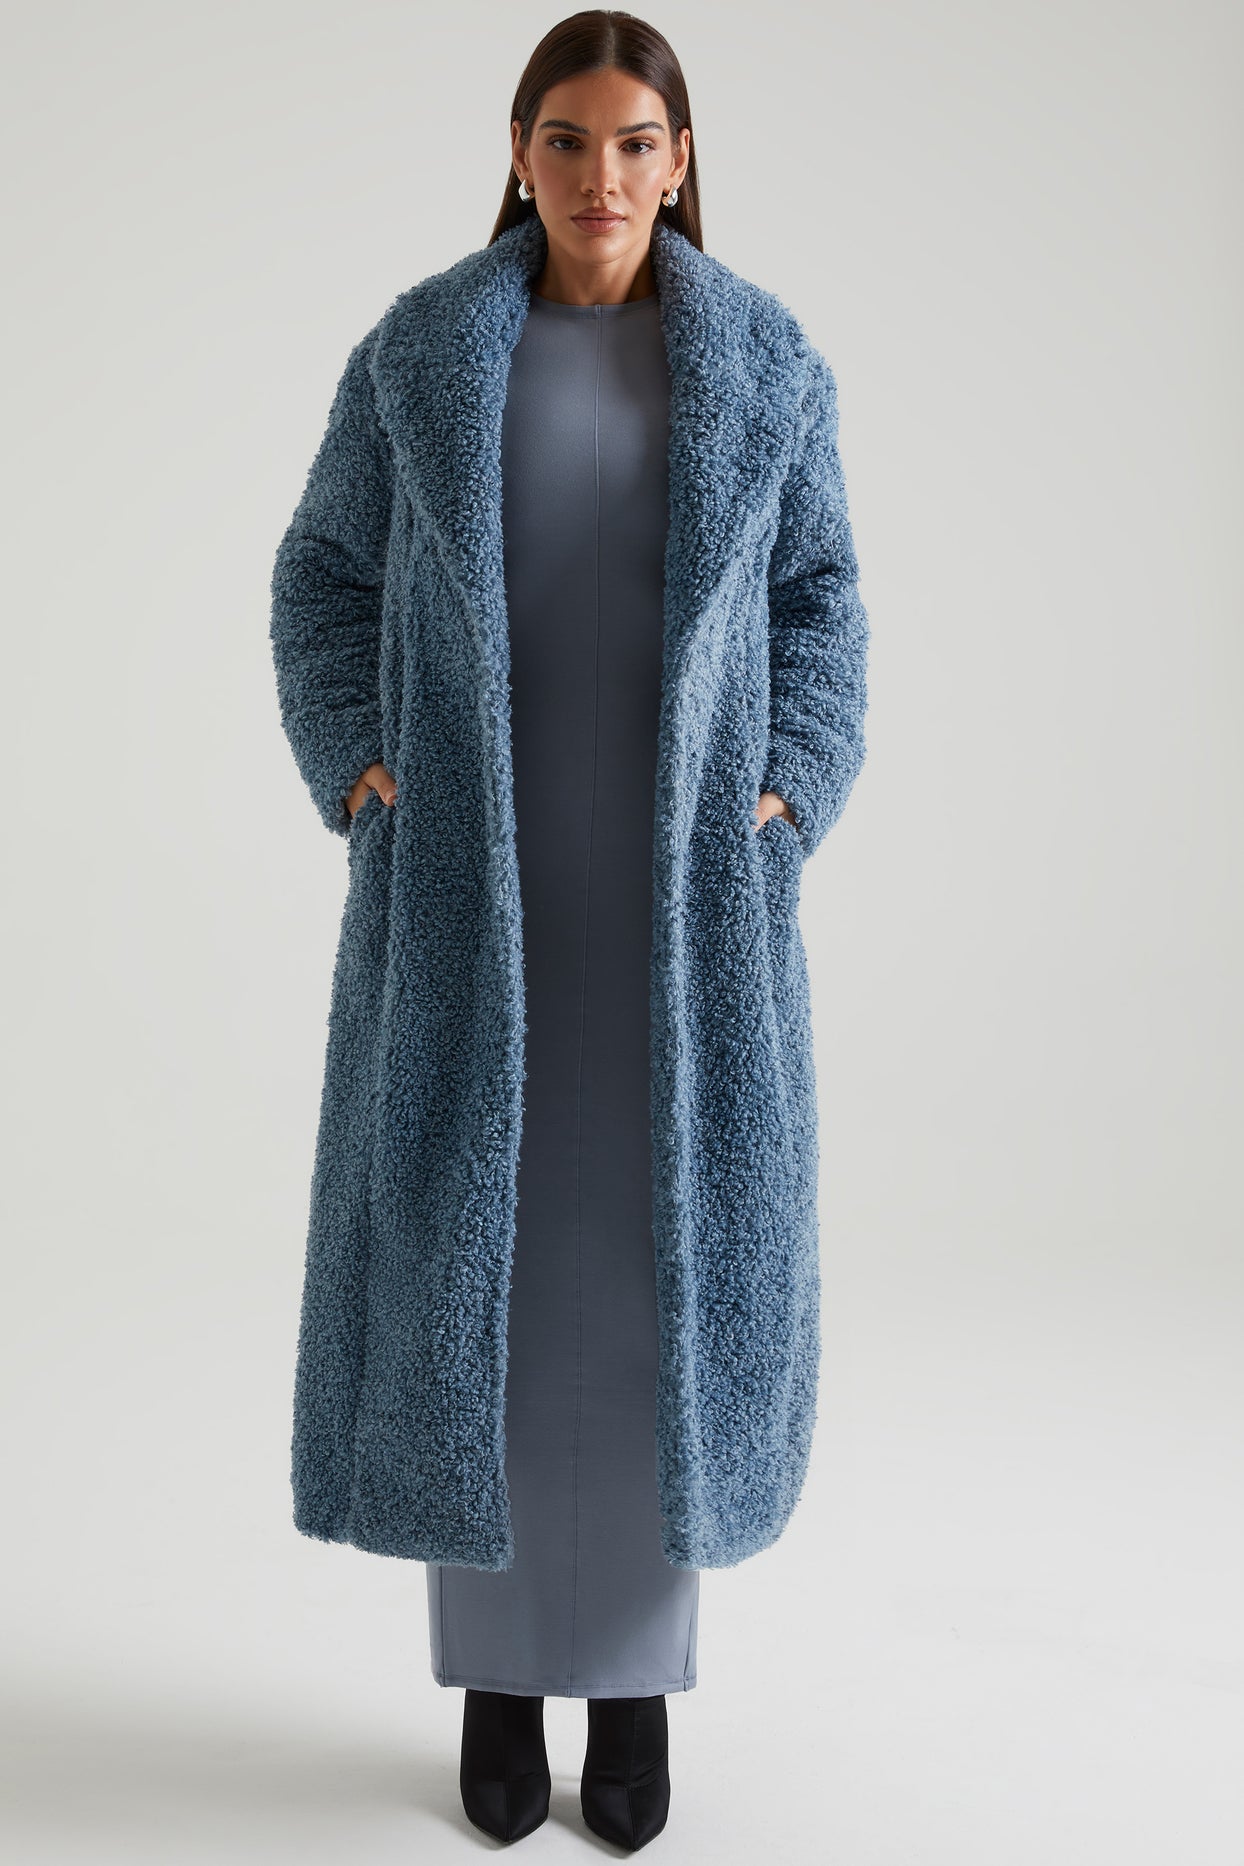 Alaska Long Shearling Coat in Blue | Oh Polly